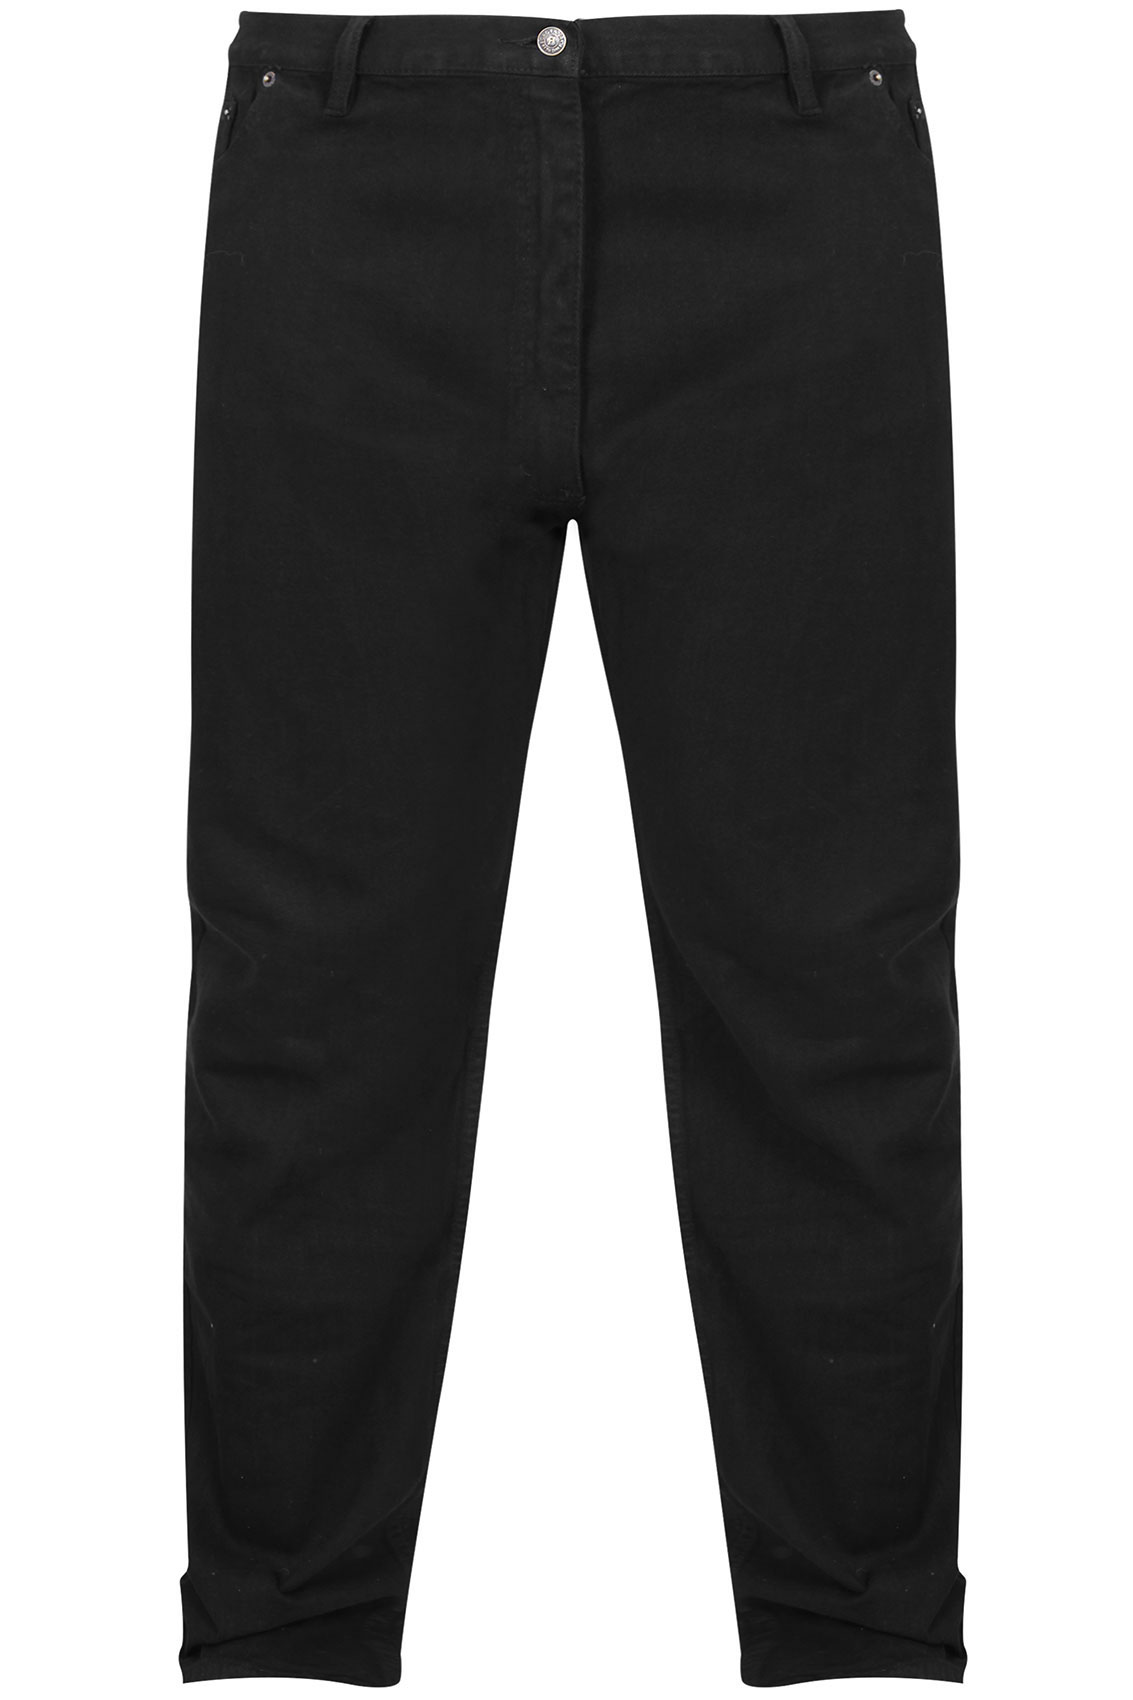 Rockford Black Stretch Jeans Extra Large 42,44,46,48,50,52,54,56,58,60